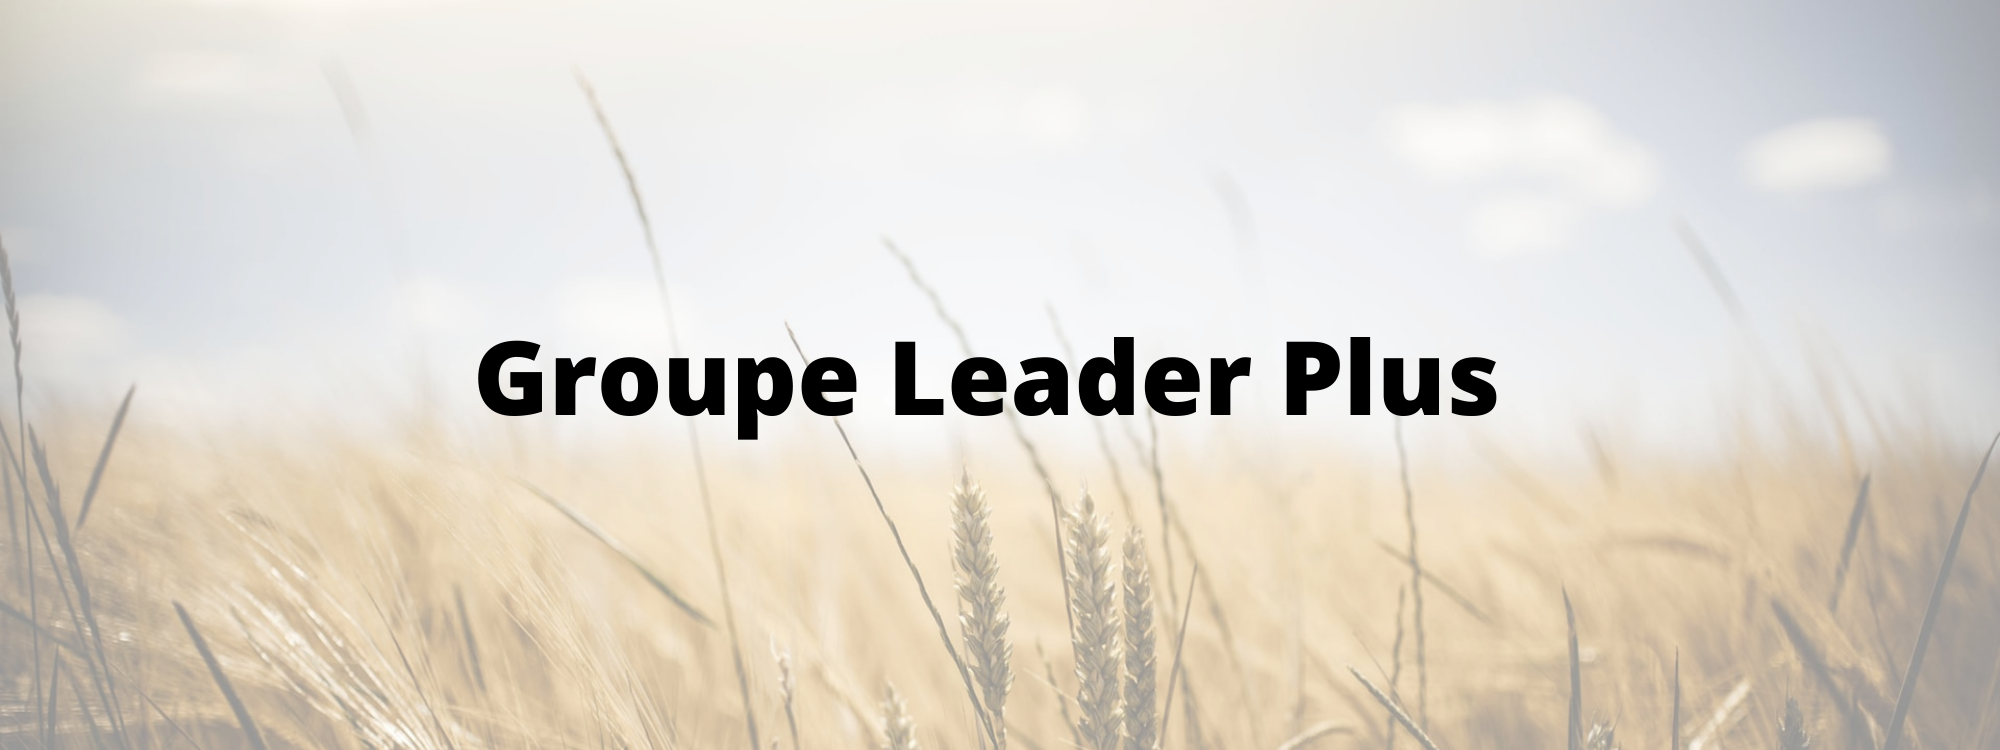 Groupe Leader Plus